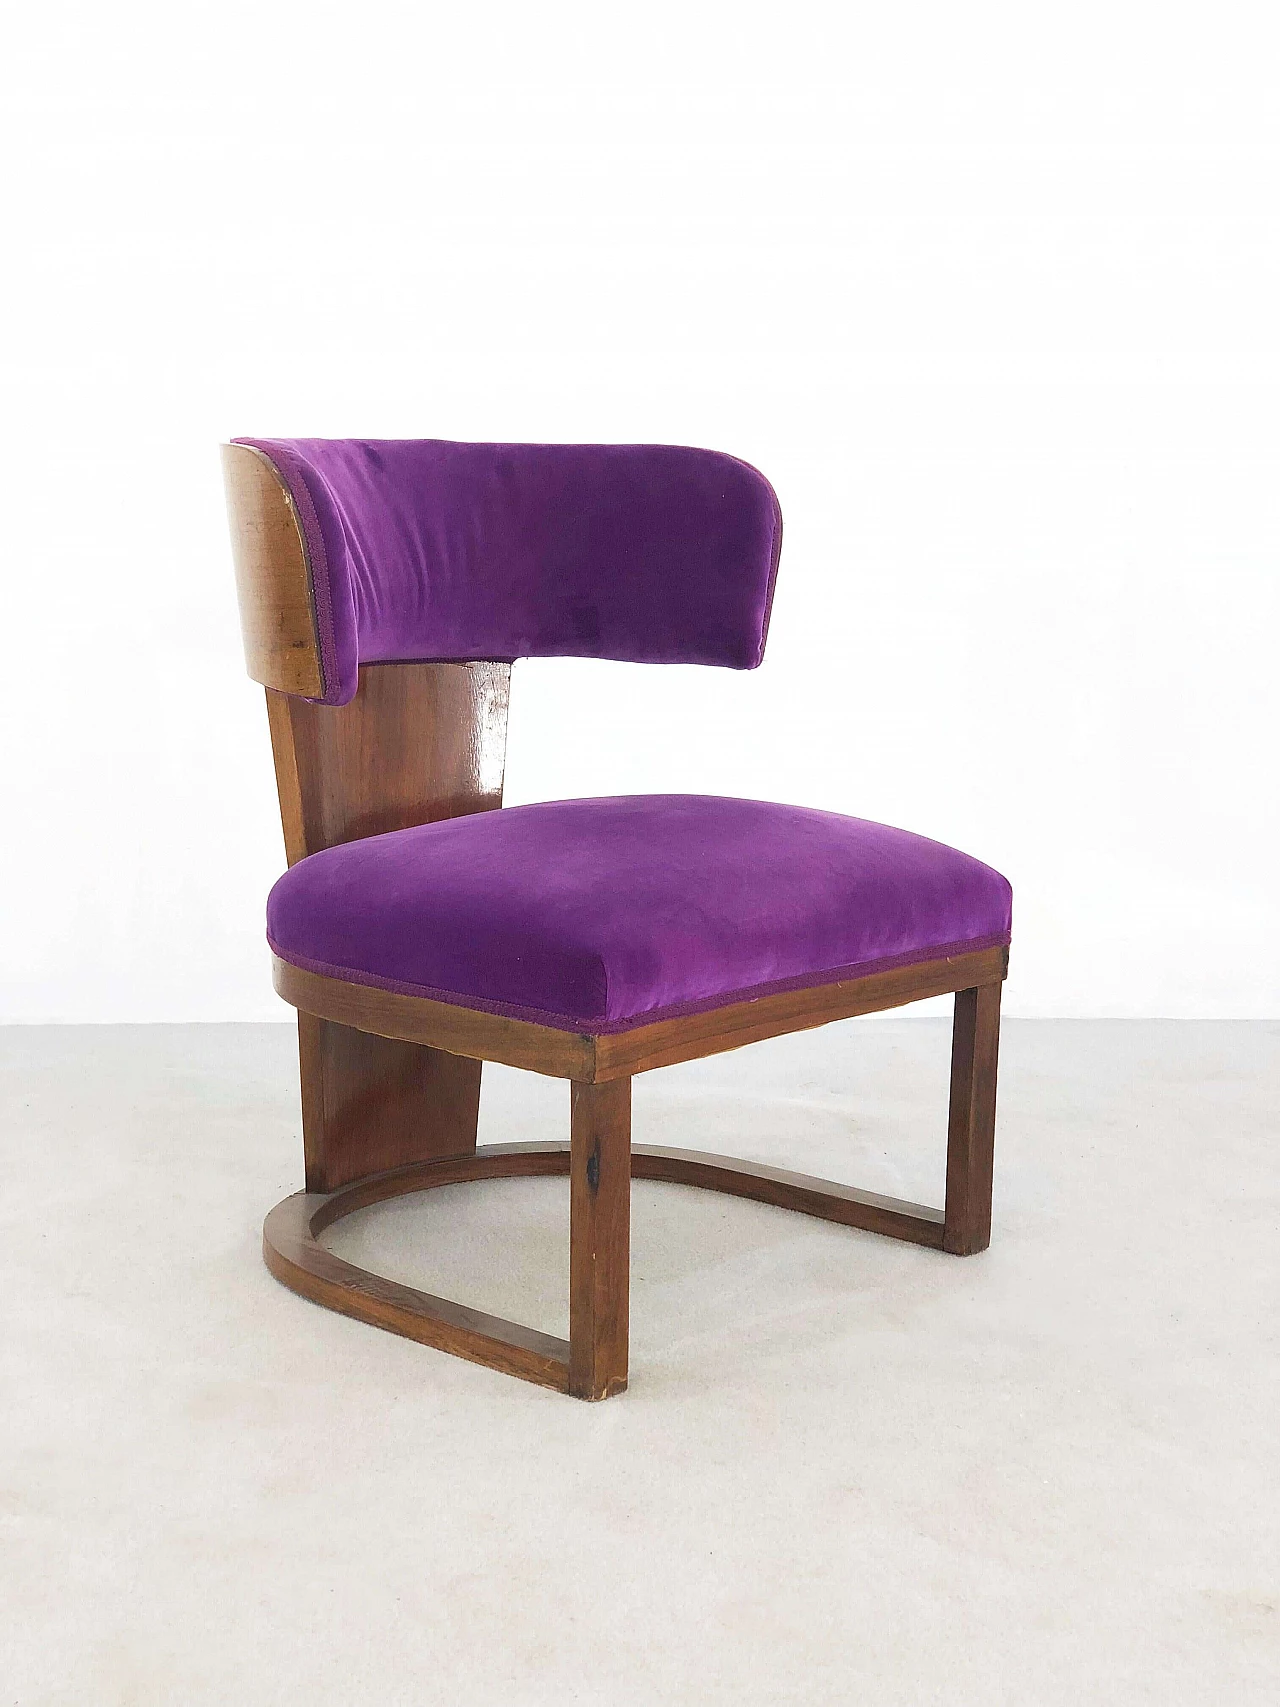 Ernesto Lapadula's armchair in wood and purple velvet, 1930s 1466321